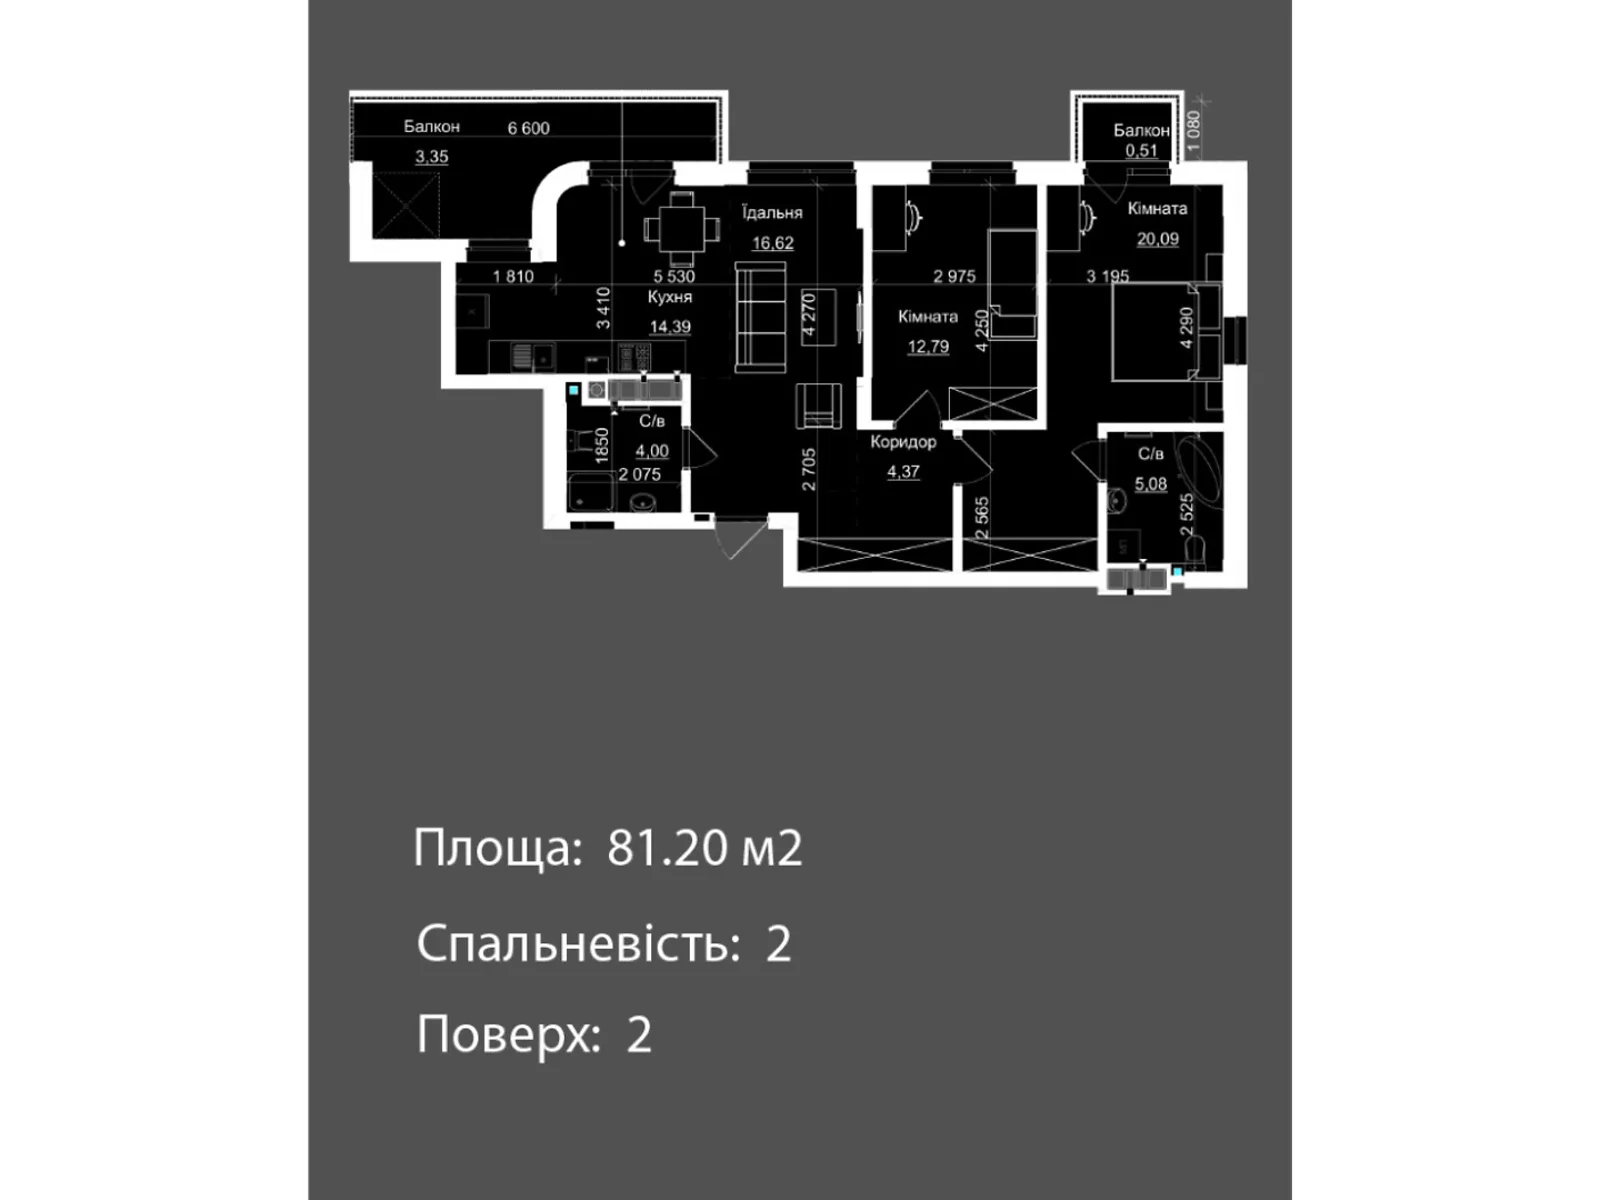 Продается 2-комнатная квартира 81.2 кв. м в Львове, цена: 122125 $ - фото 1